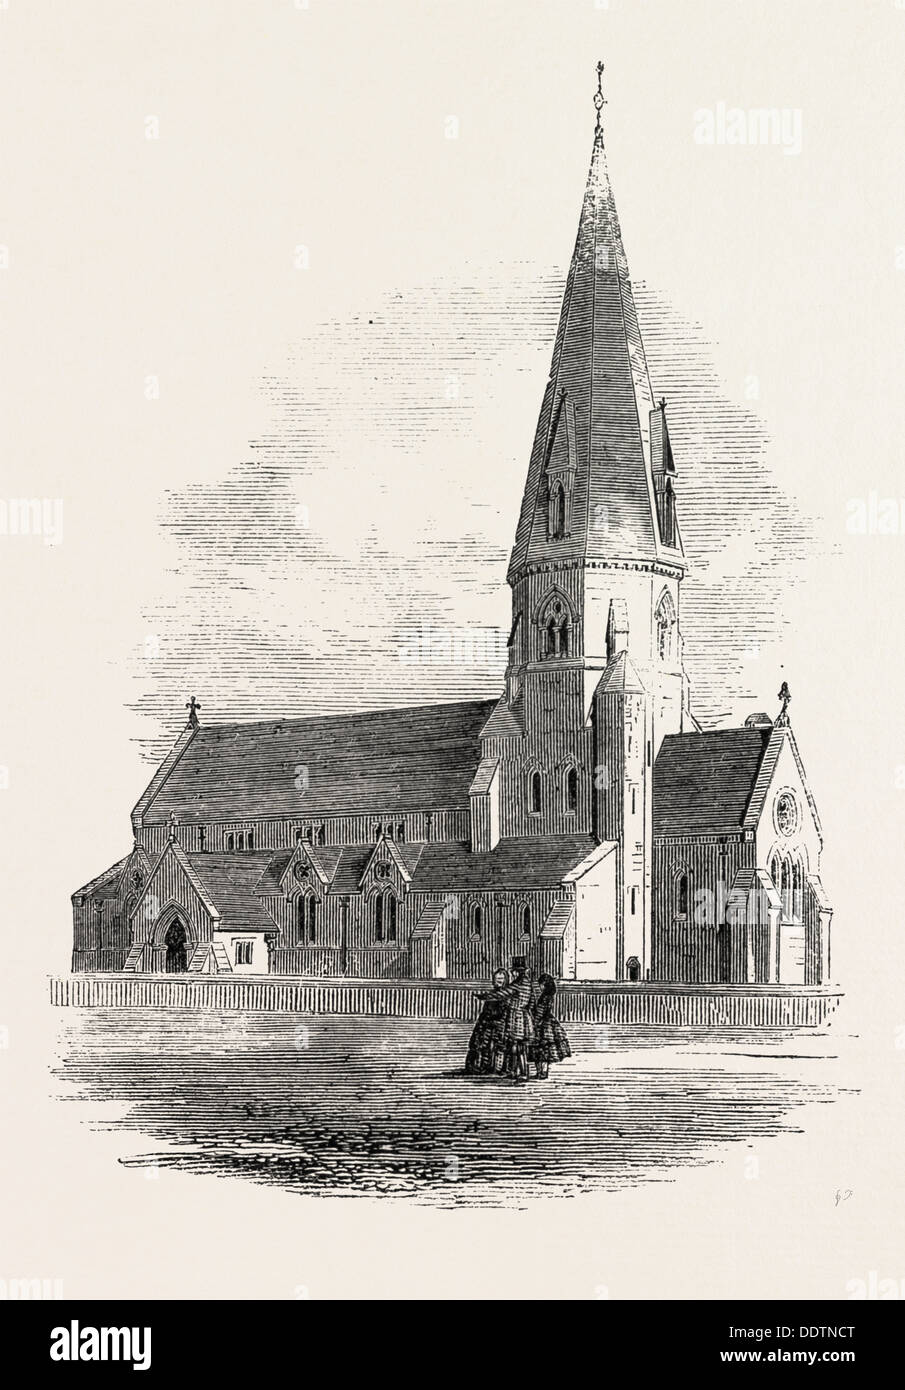 ST. MICHAEL'S CHURCH, LEAFIELD, OXFORDSHIRE, UK, 1860 engraving Stock Photo